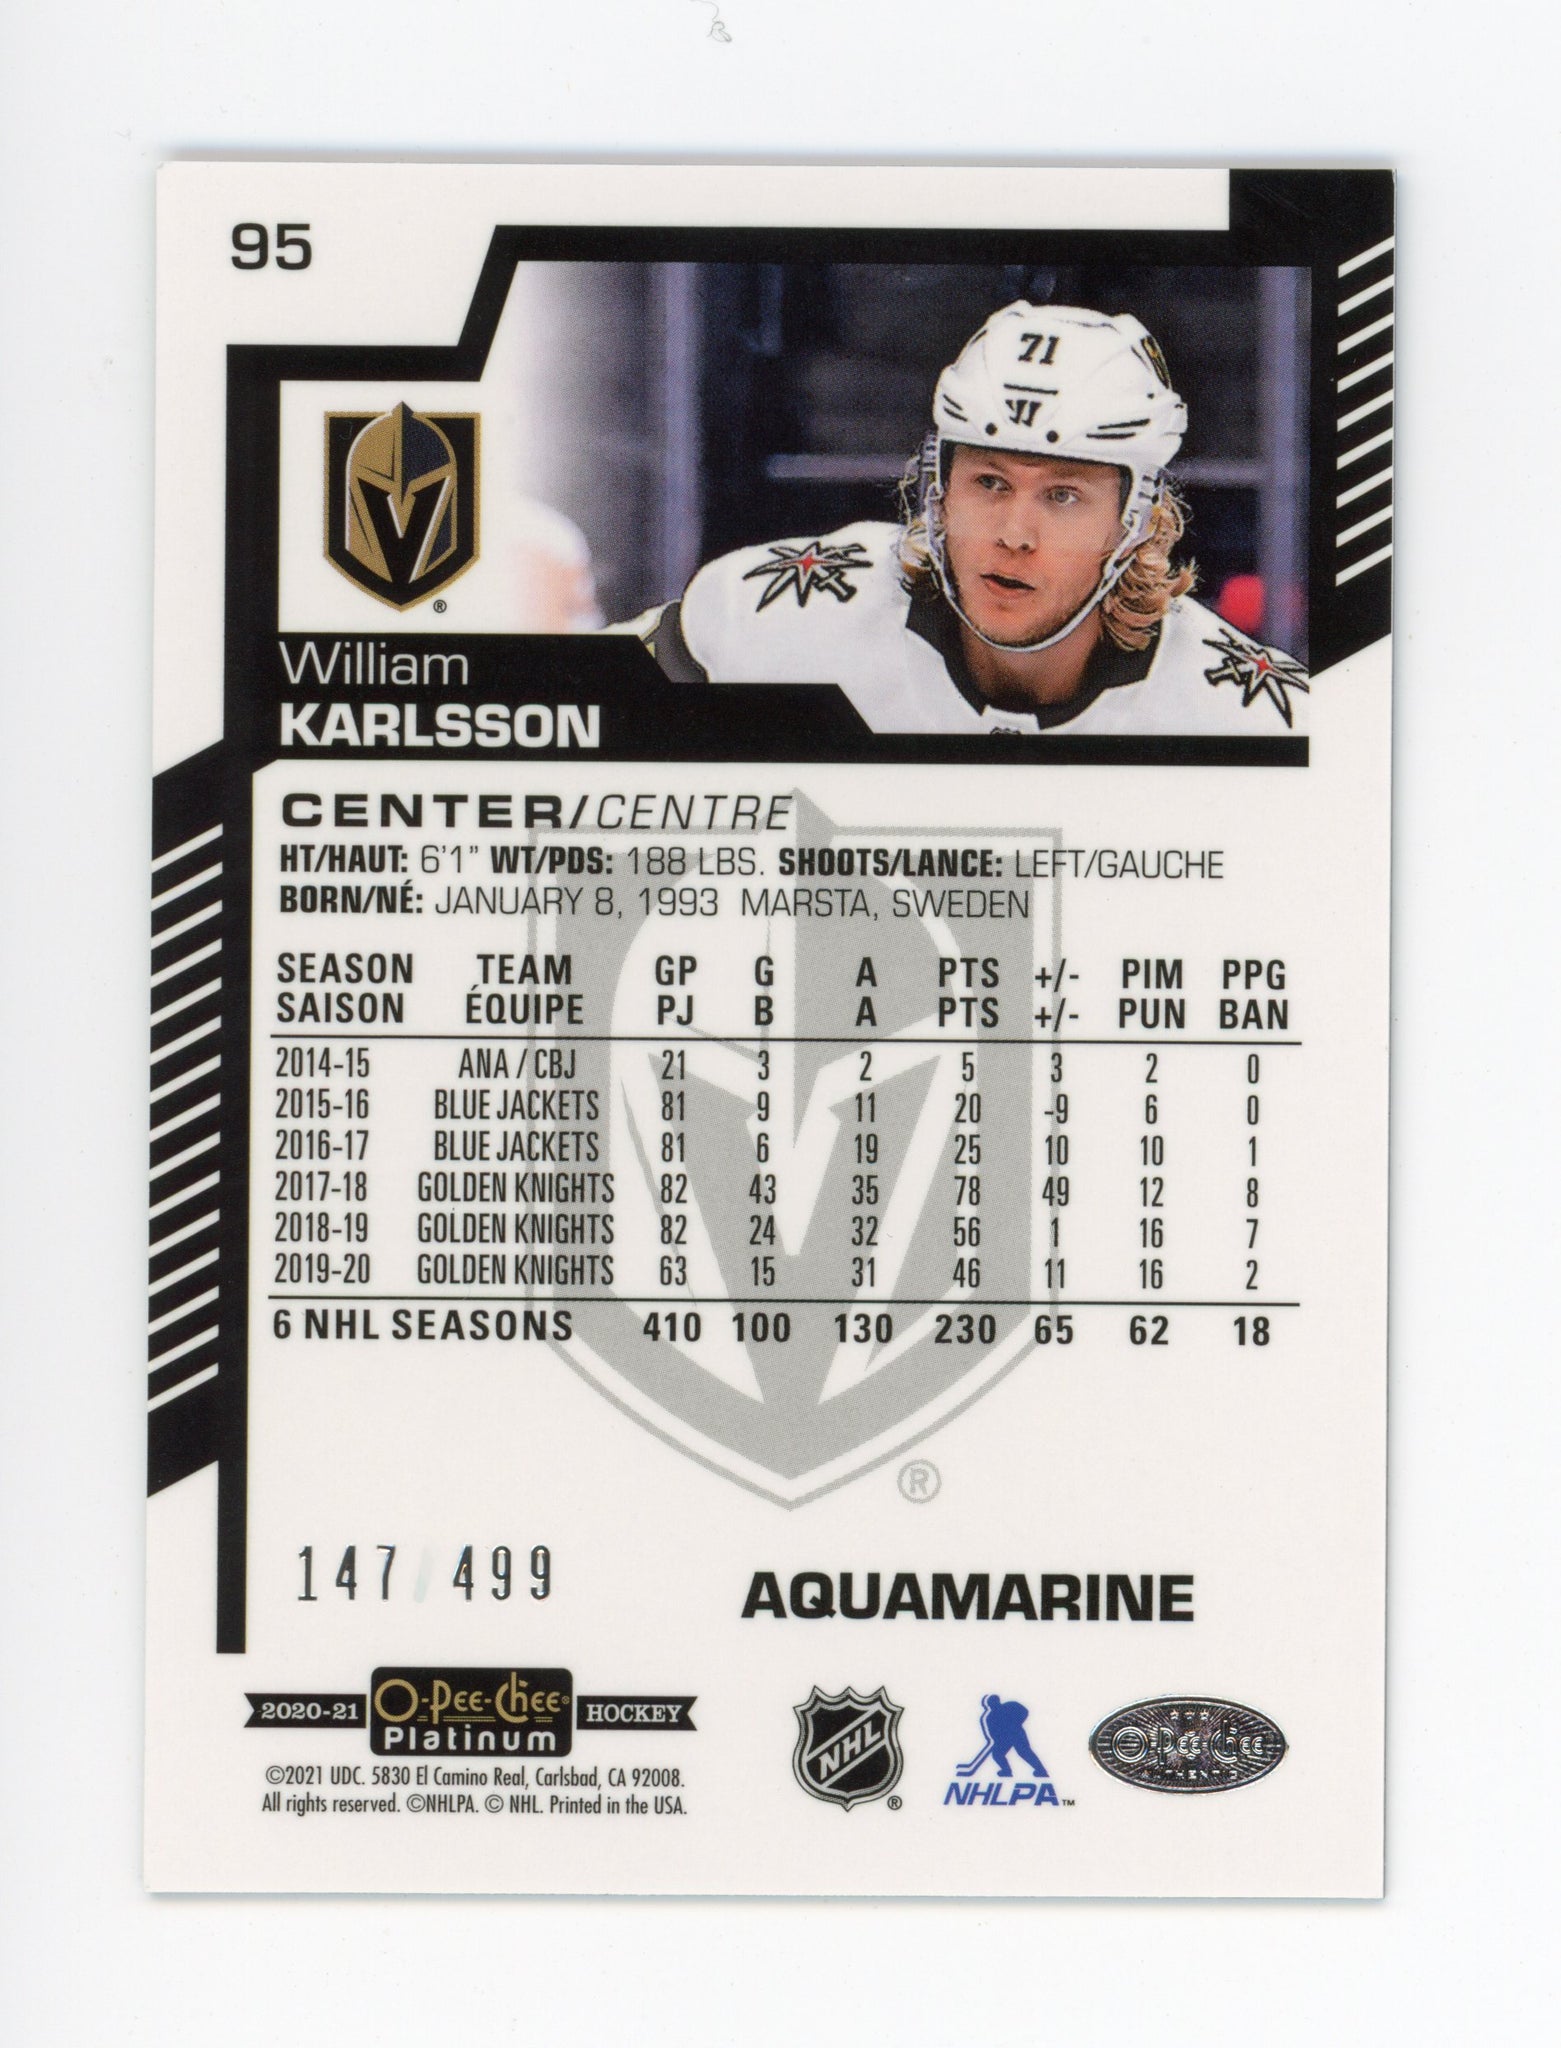 2020-2021 William Karlsson Aquamarine #d /499 Las Vegas Golden Knights # 95